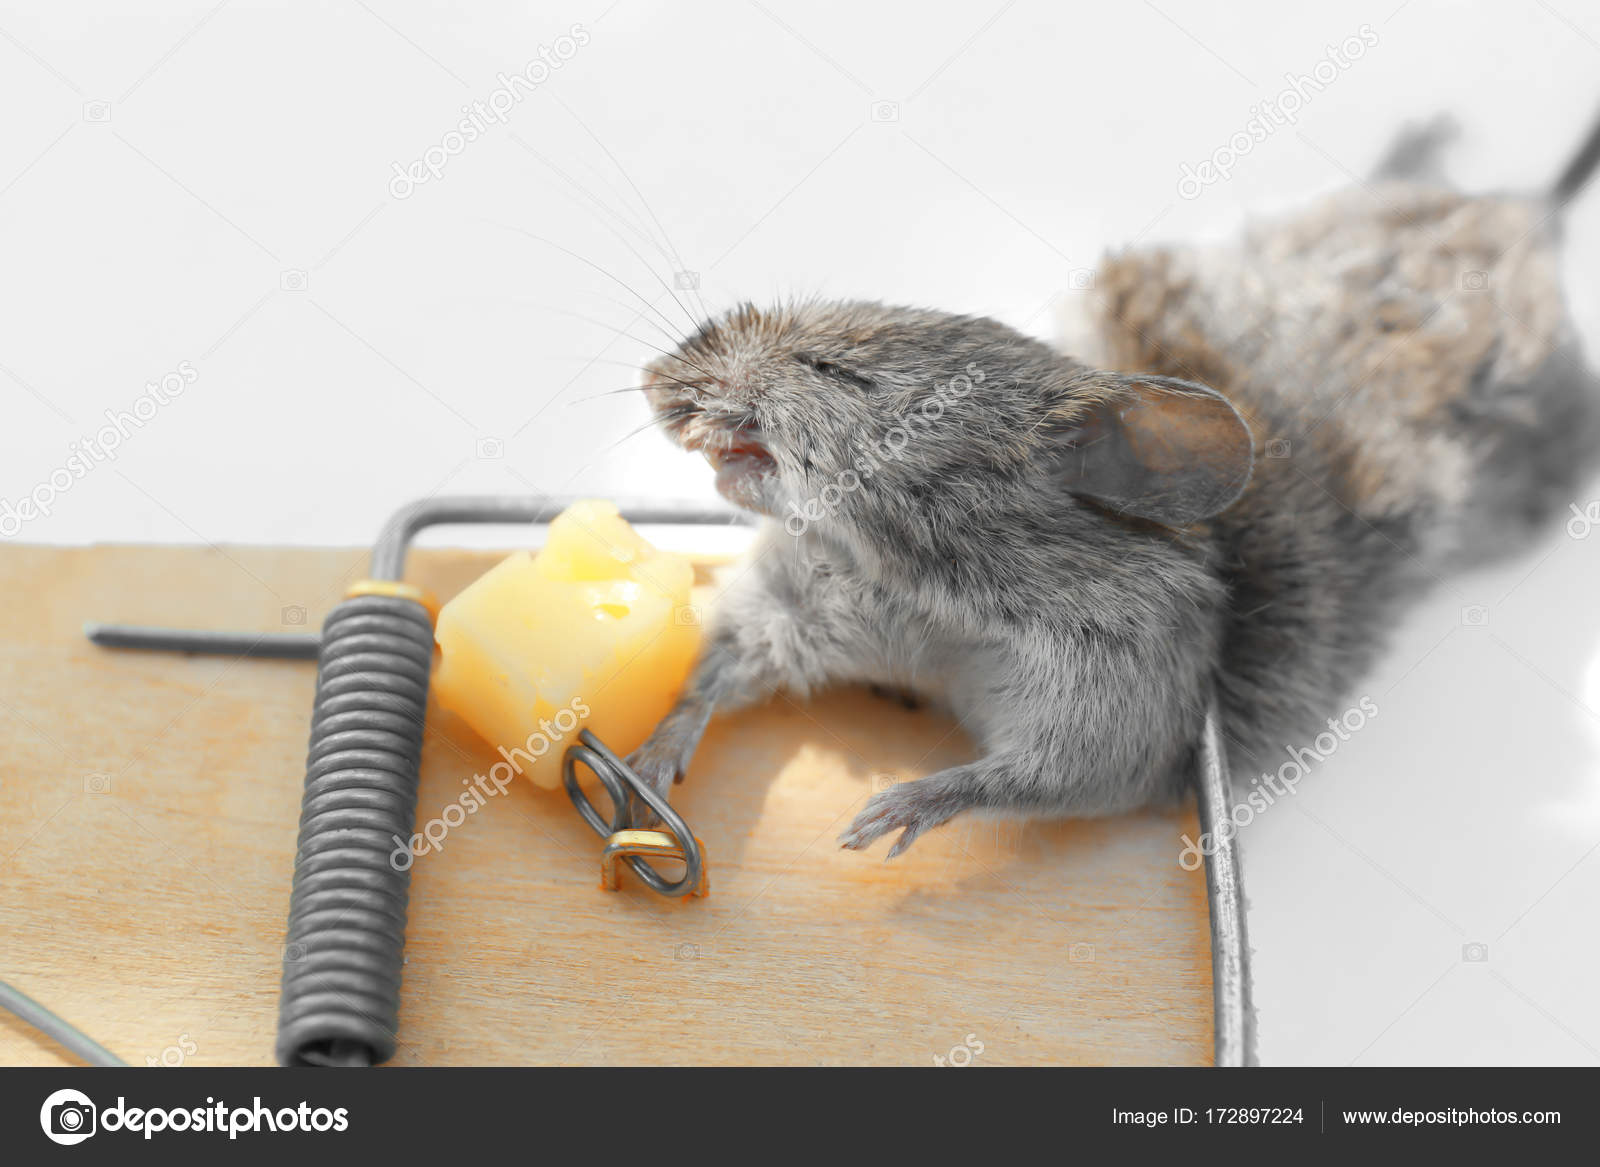 https://st3.depositphotos.com/1177973/17289/i/1600/depositphotos_172897224-stock-photo-dead-mouse-caught-in-snap.jpg